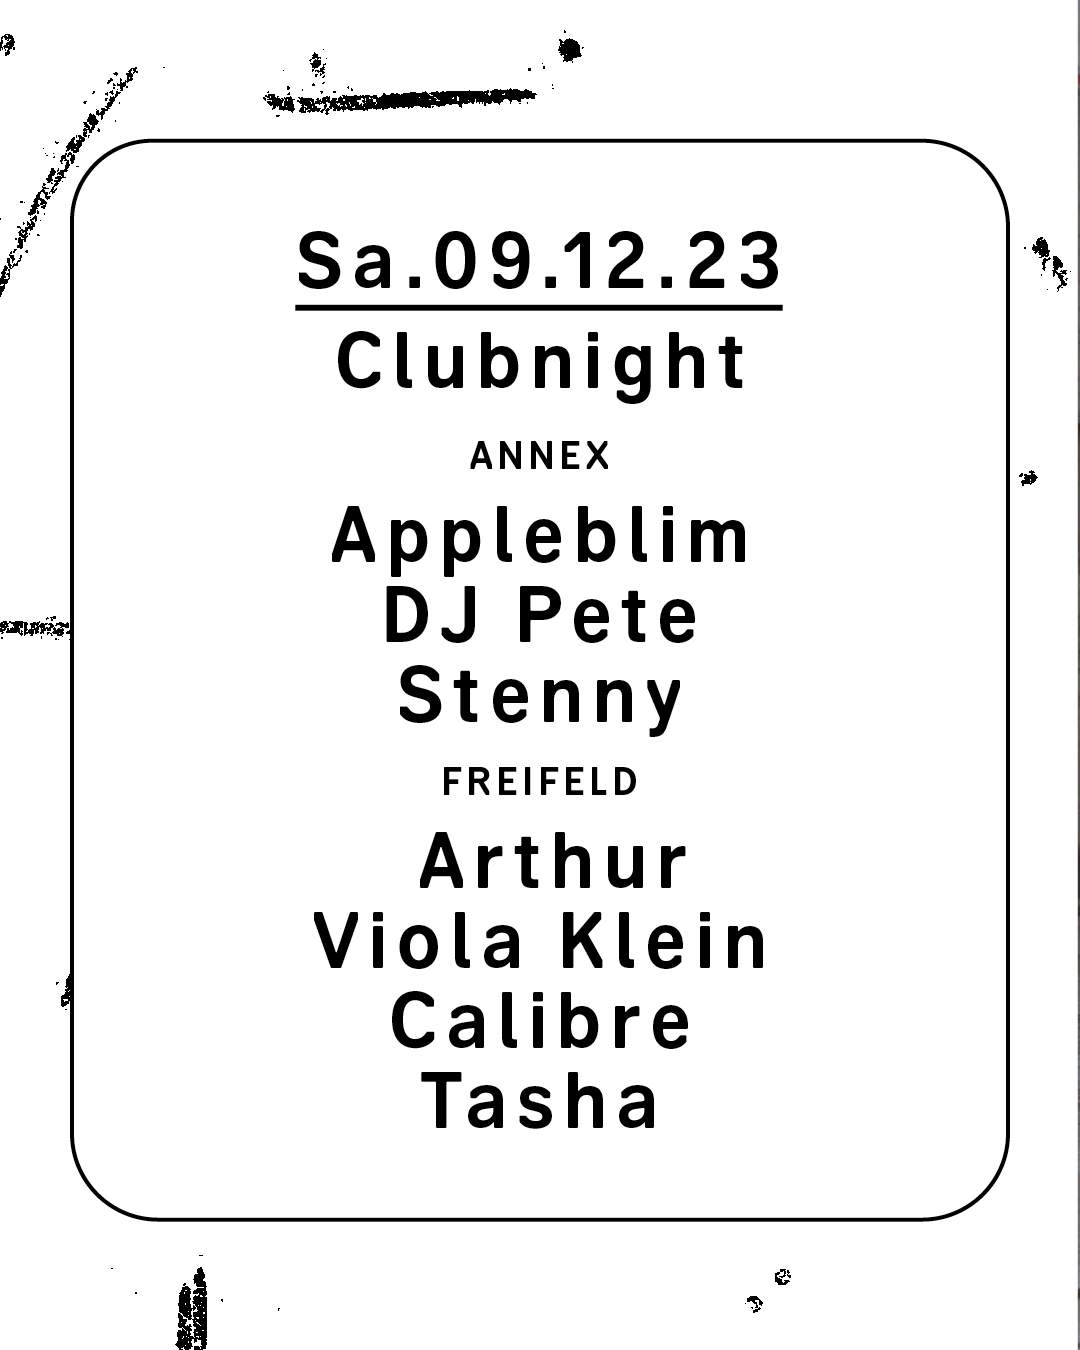 Clubnight - Arthur, Viola Klein, Calibre, Tasha, Appleblim, DJ Pete, Stenny - フライヤー裏